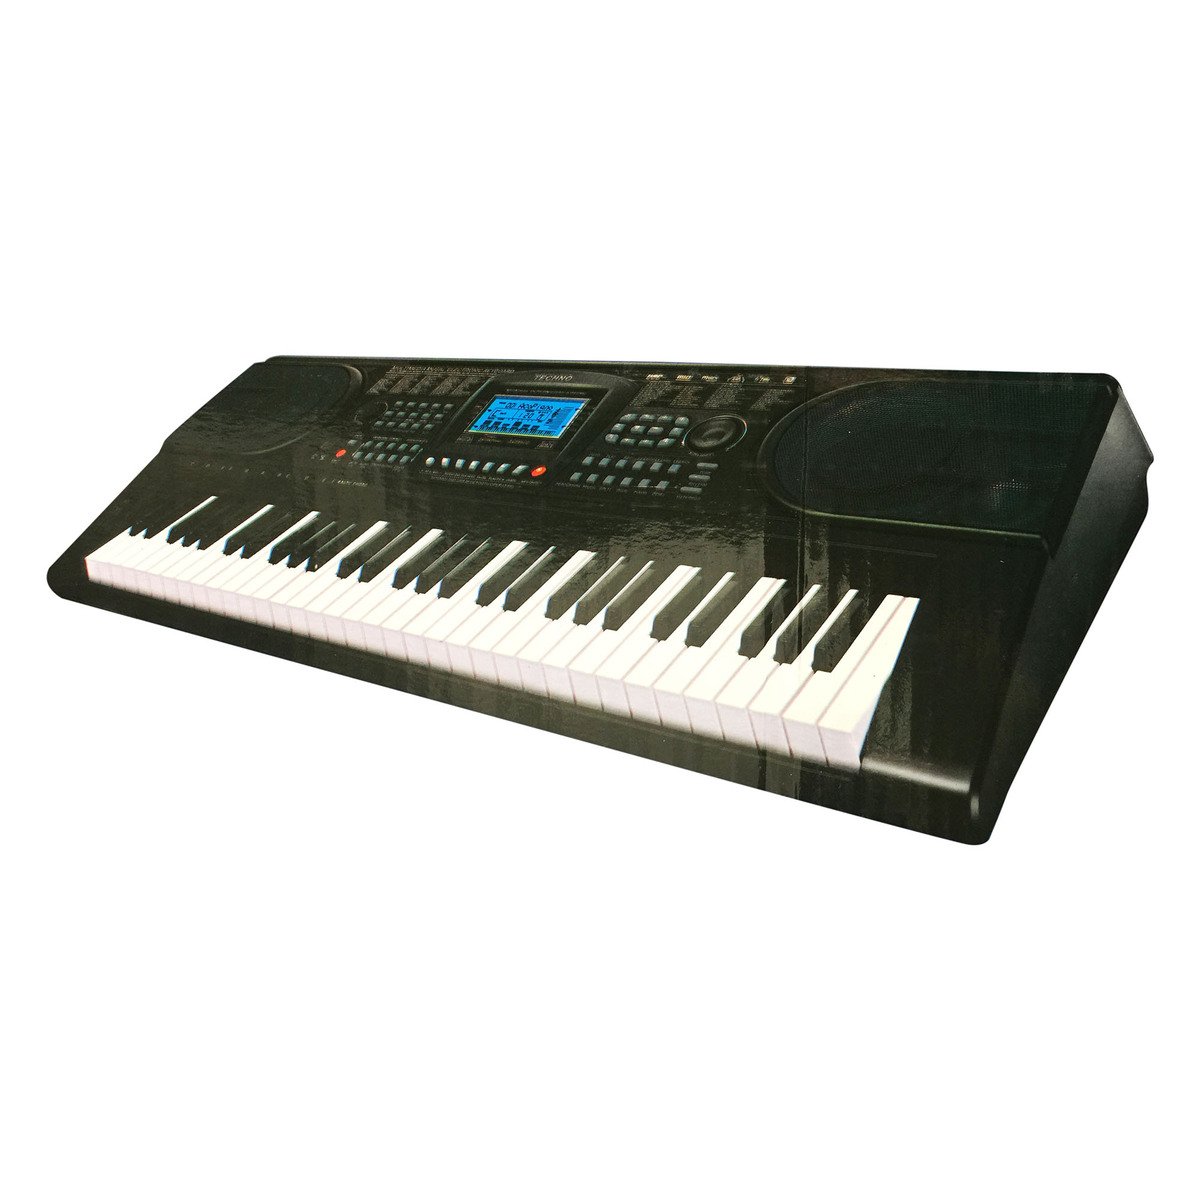 Techno Electronic Keyboard T-9890 g2